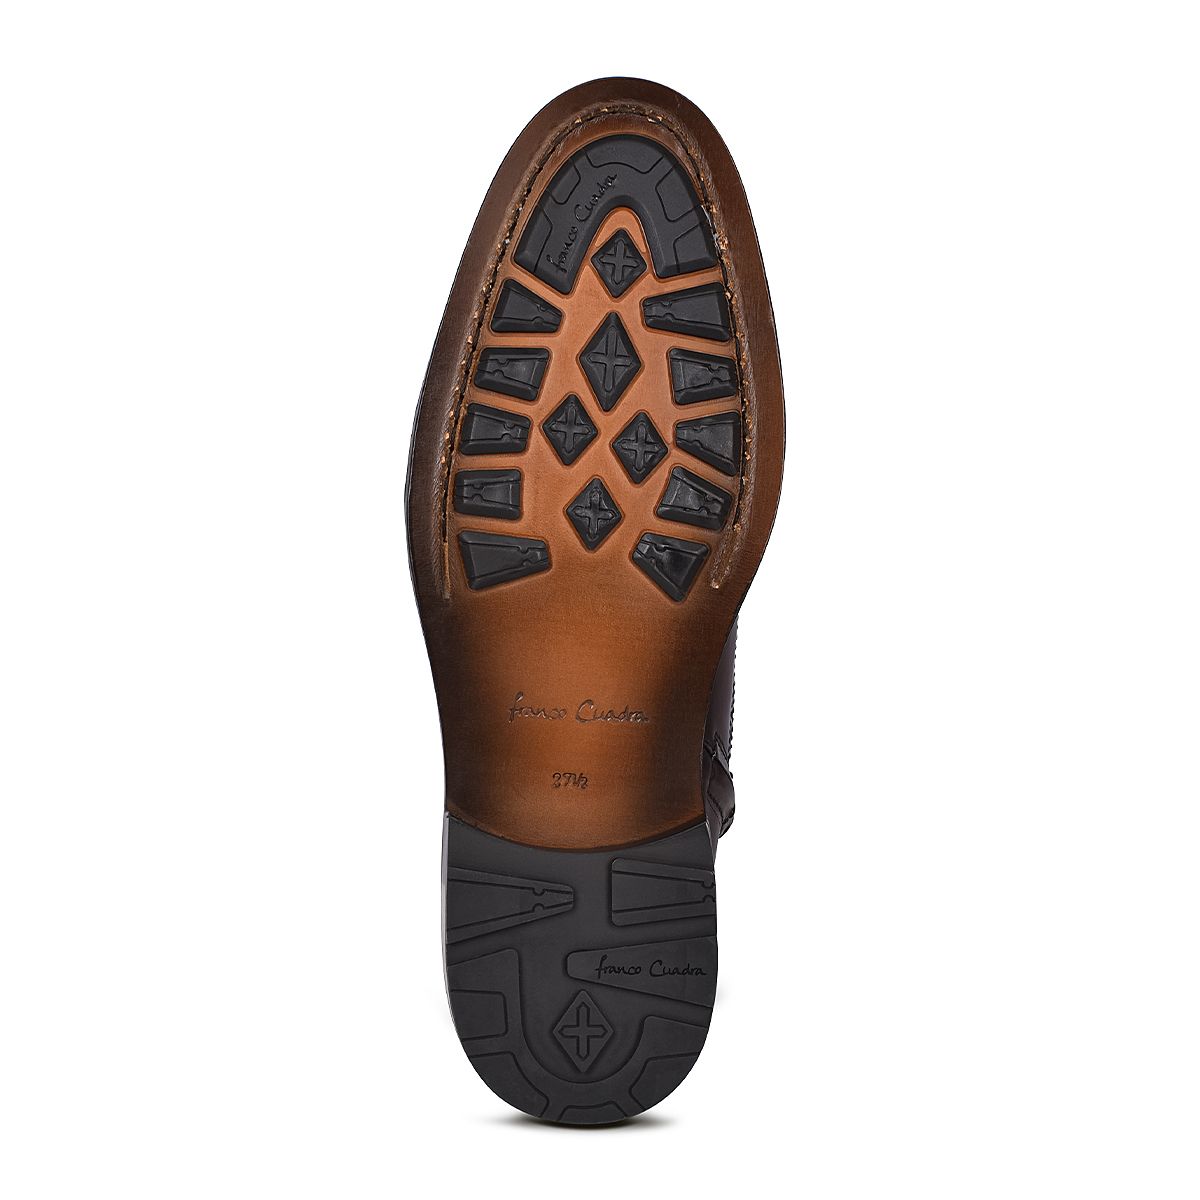 G88BSVN - Cuadra chocolate casual dress calfskin ankle oxford boots for men-Kuet.us